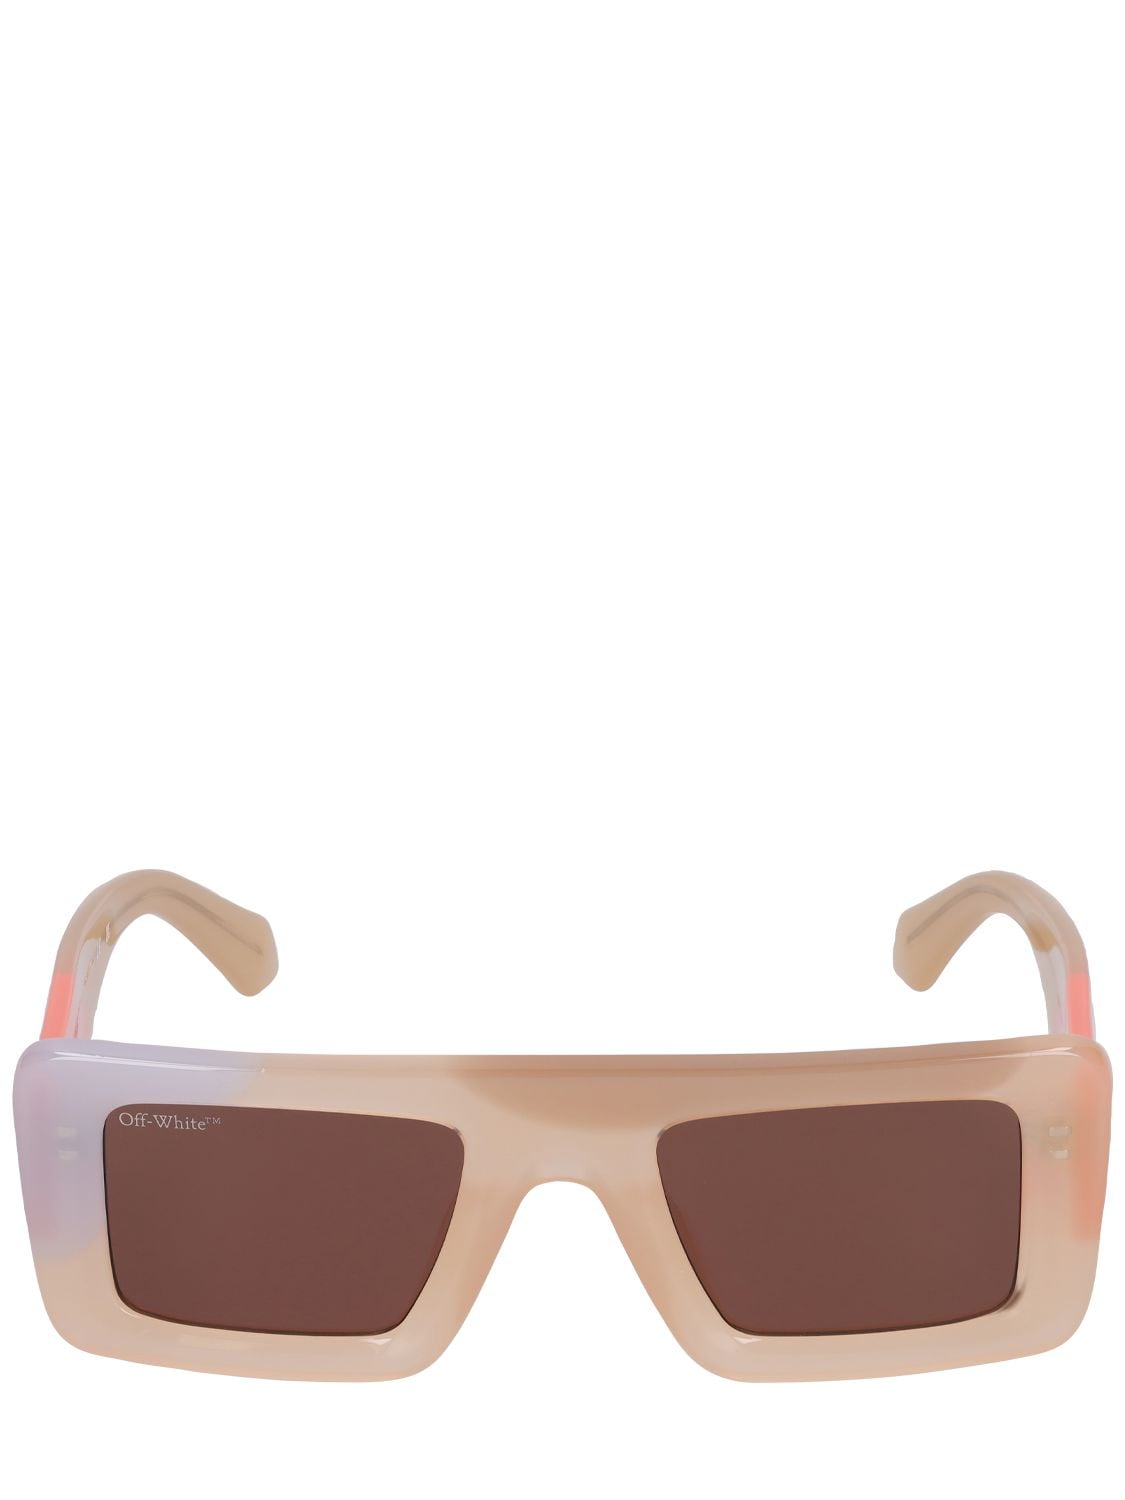 Seattle Squared Acetate Sunglasses - OFF-WHITE - Modalova